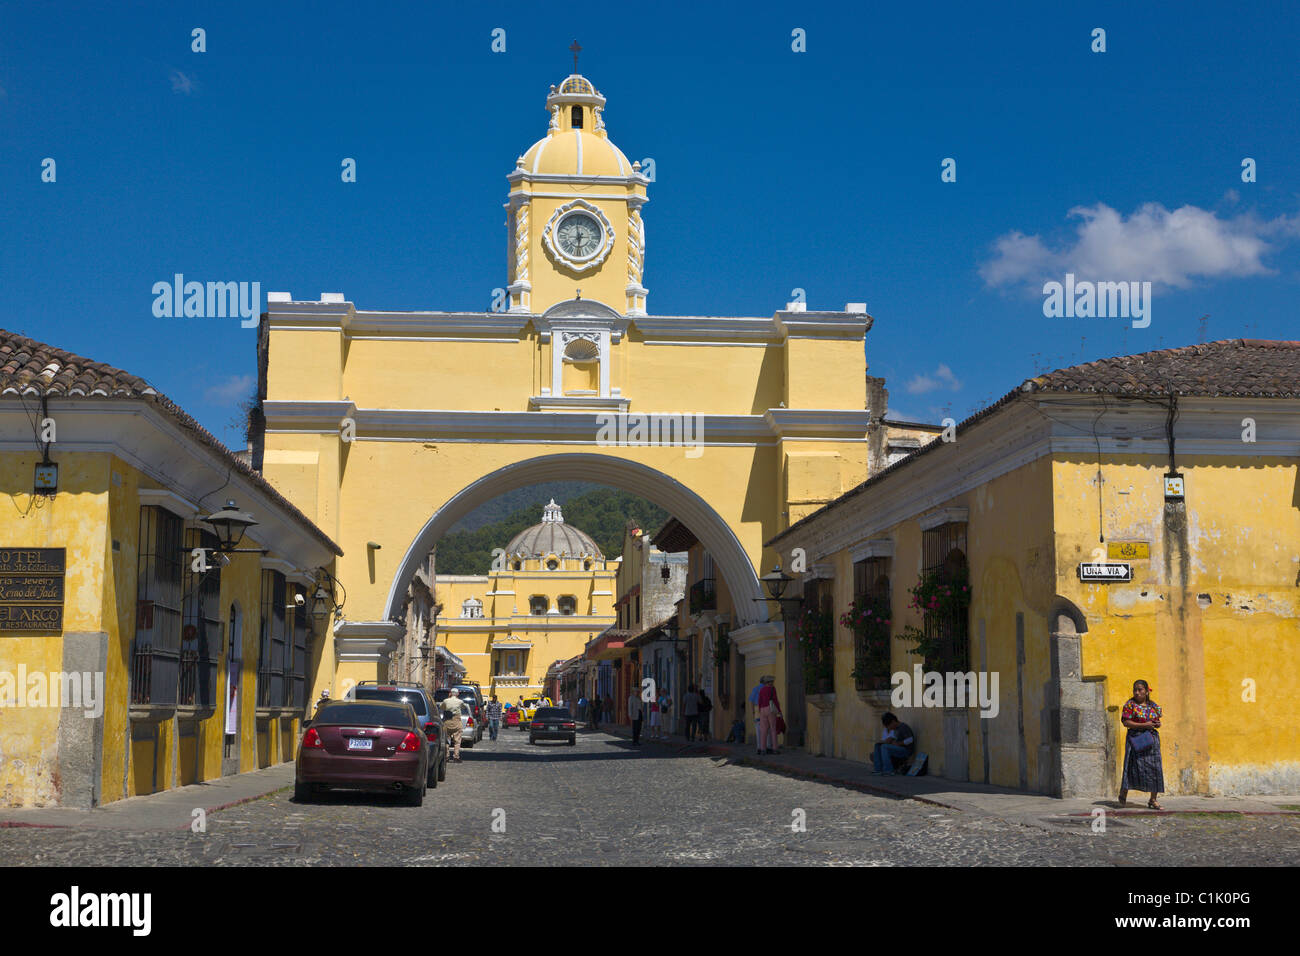 Clock Tower and arch, Antigua, Guatemala Stock Photo